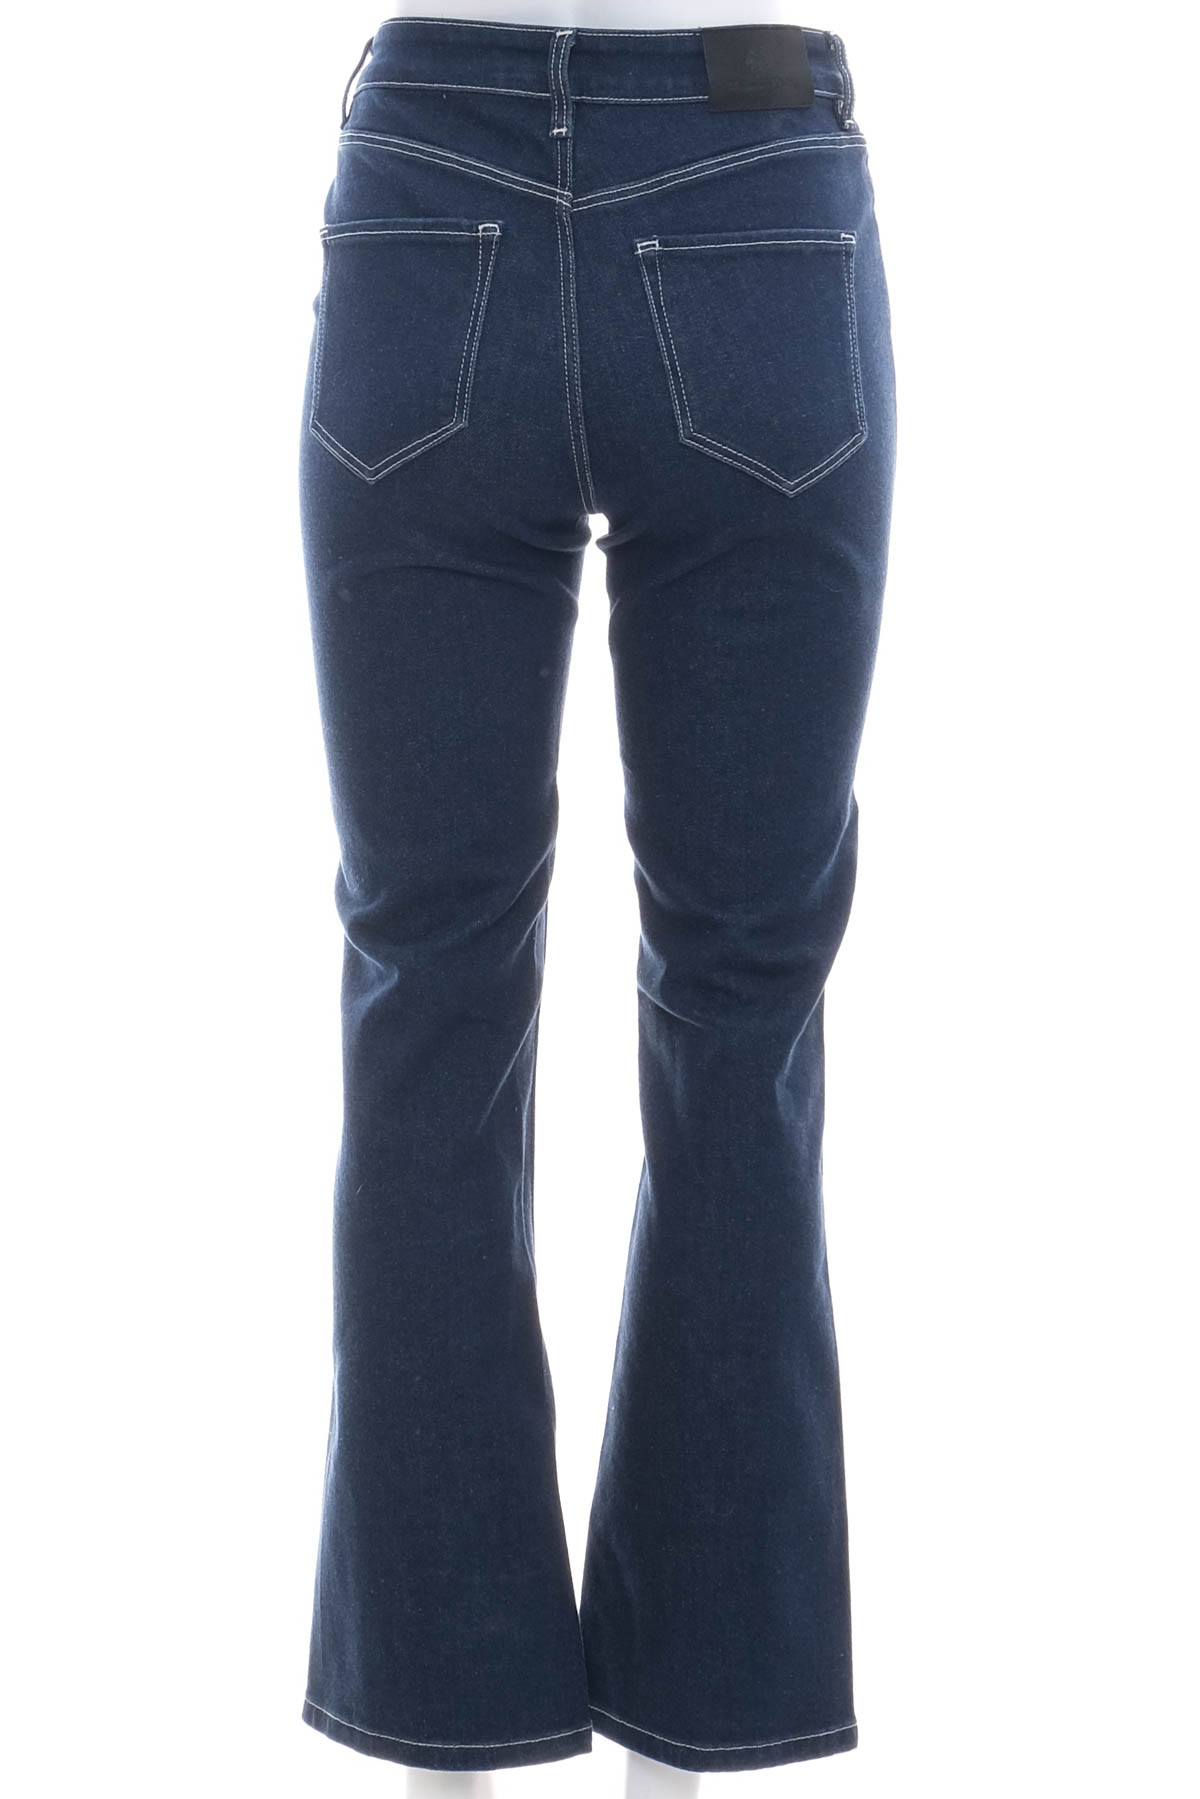 Women's jeans - Massimo Dutti - 1